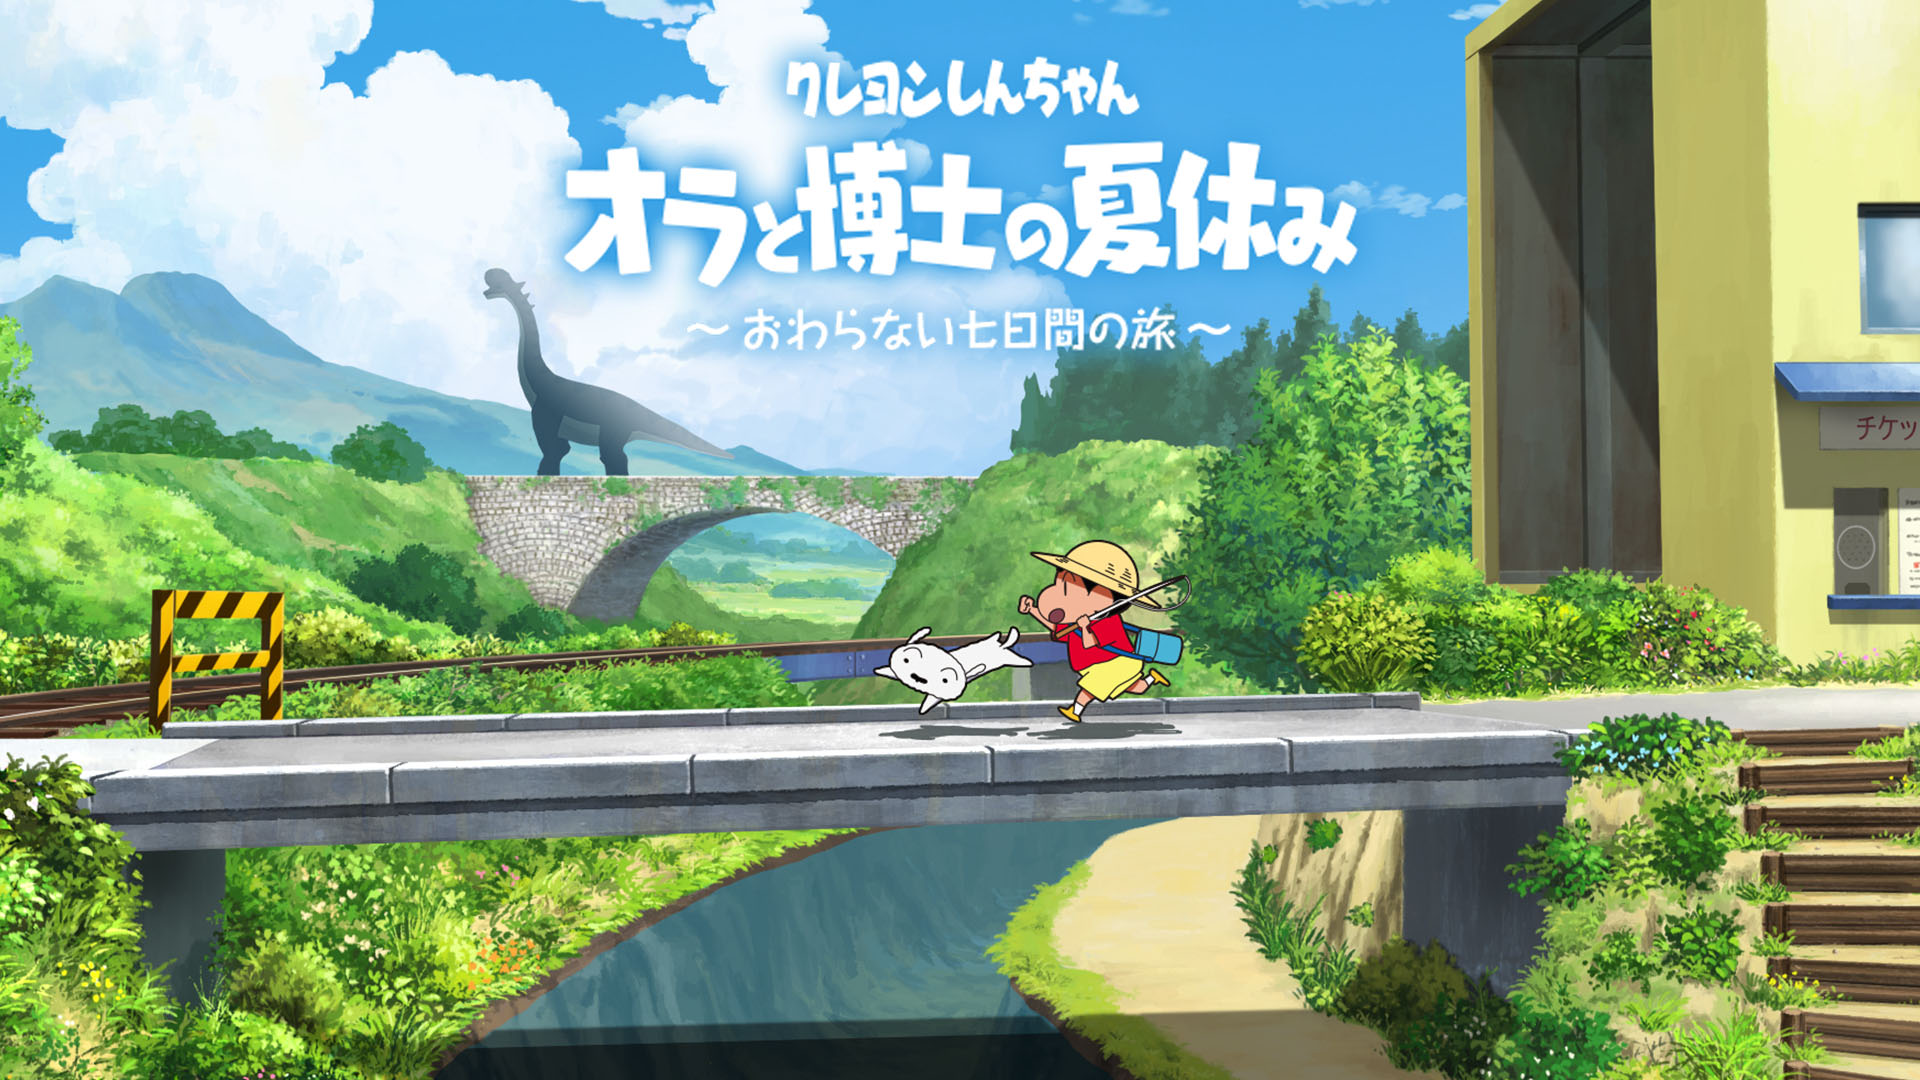 Crayon Shin-chan Game Announced for Nintendo Switch